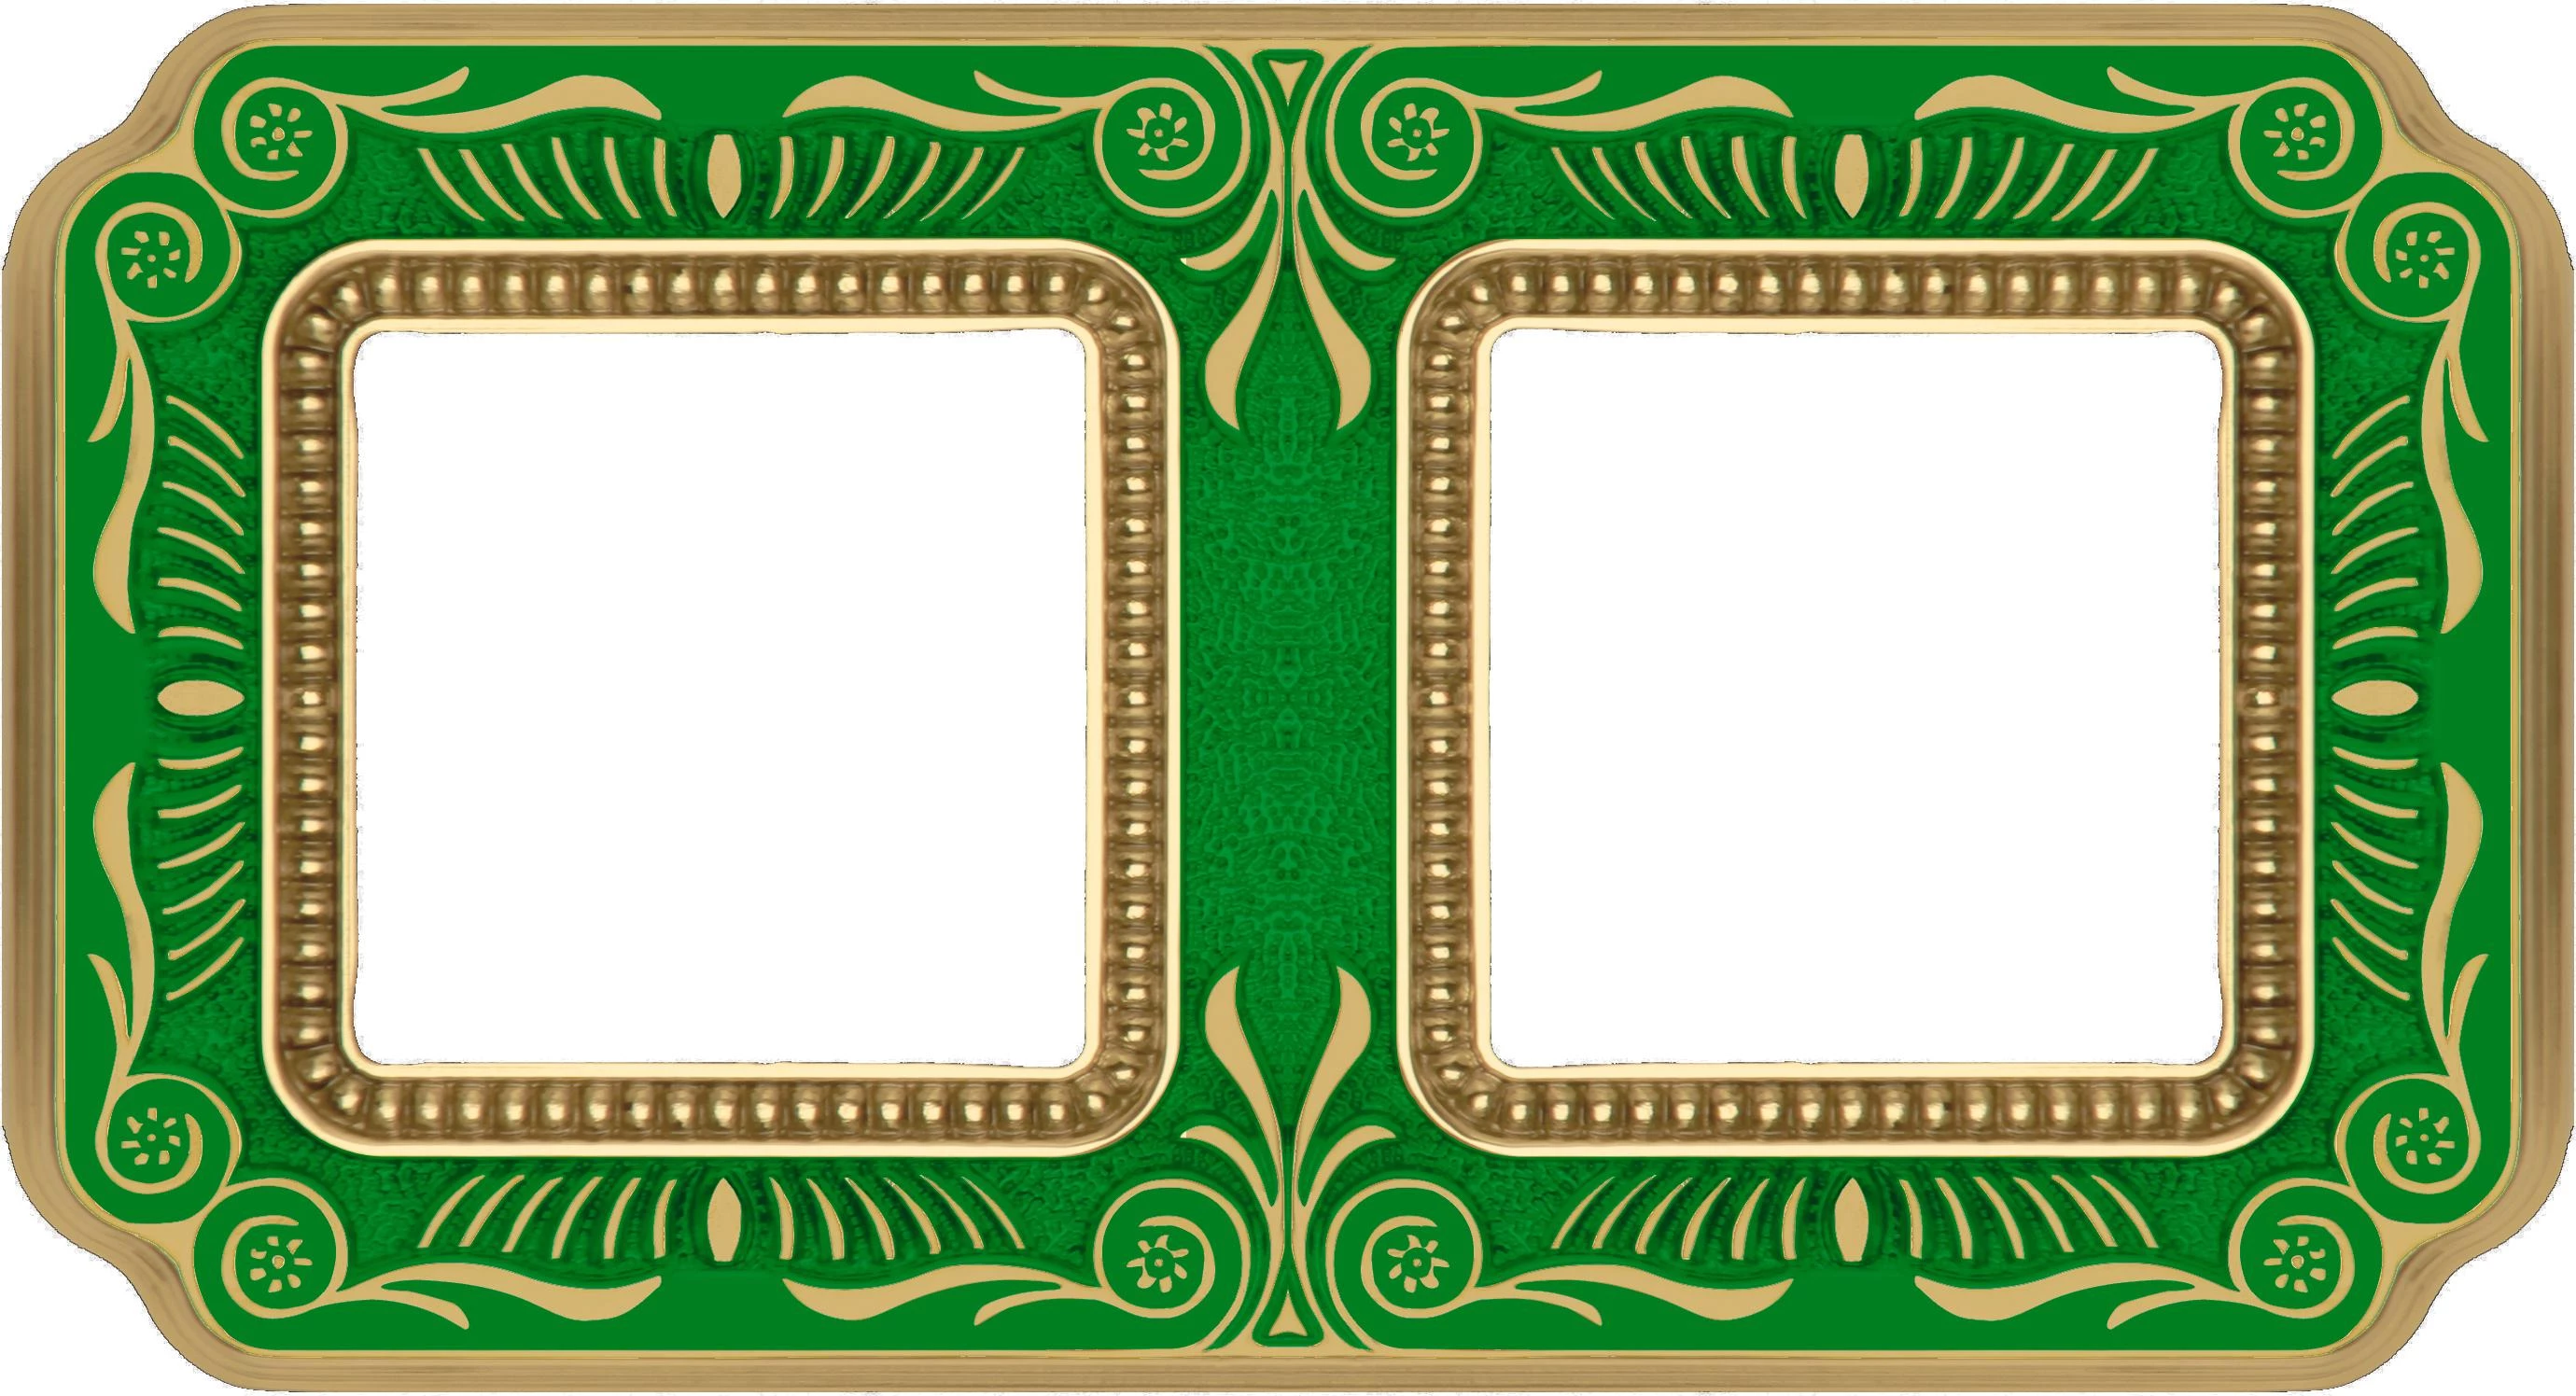  артикул FD01362VEEN название Рамка двойная, цвет Изумрудно-зеленый, Firenze, Fede